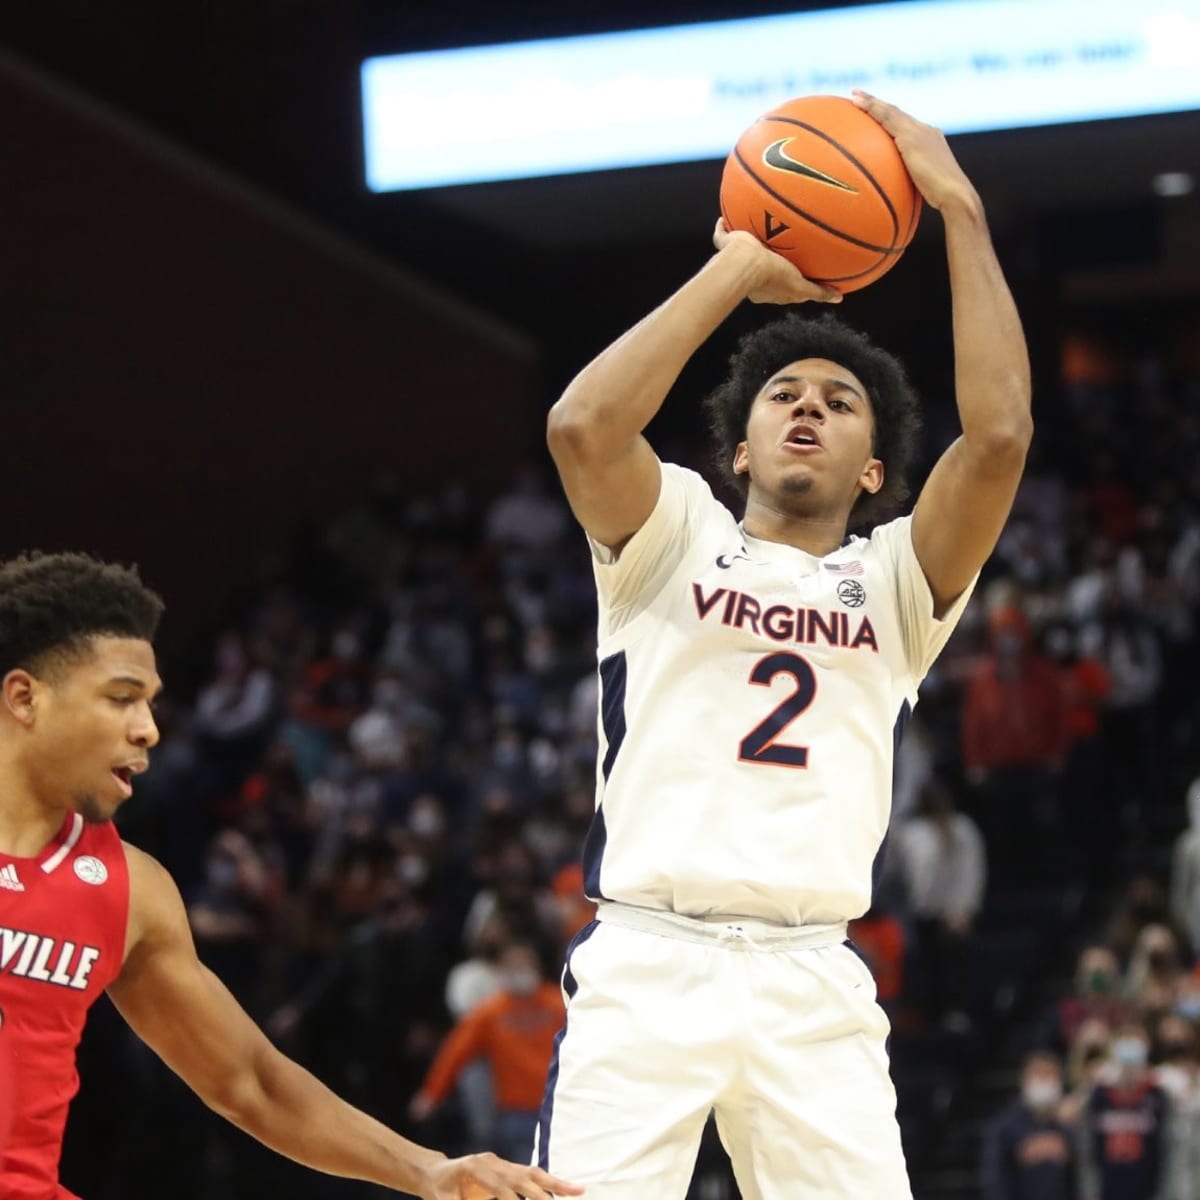 Virginia defeats Louisville 51-50 in ACC Men's Basketball Tournament